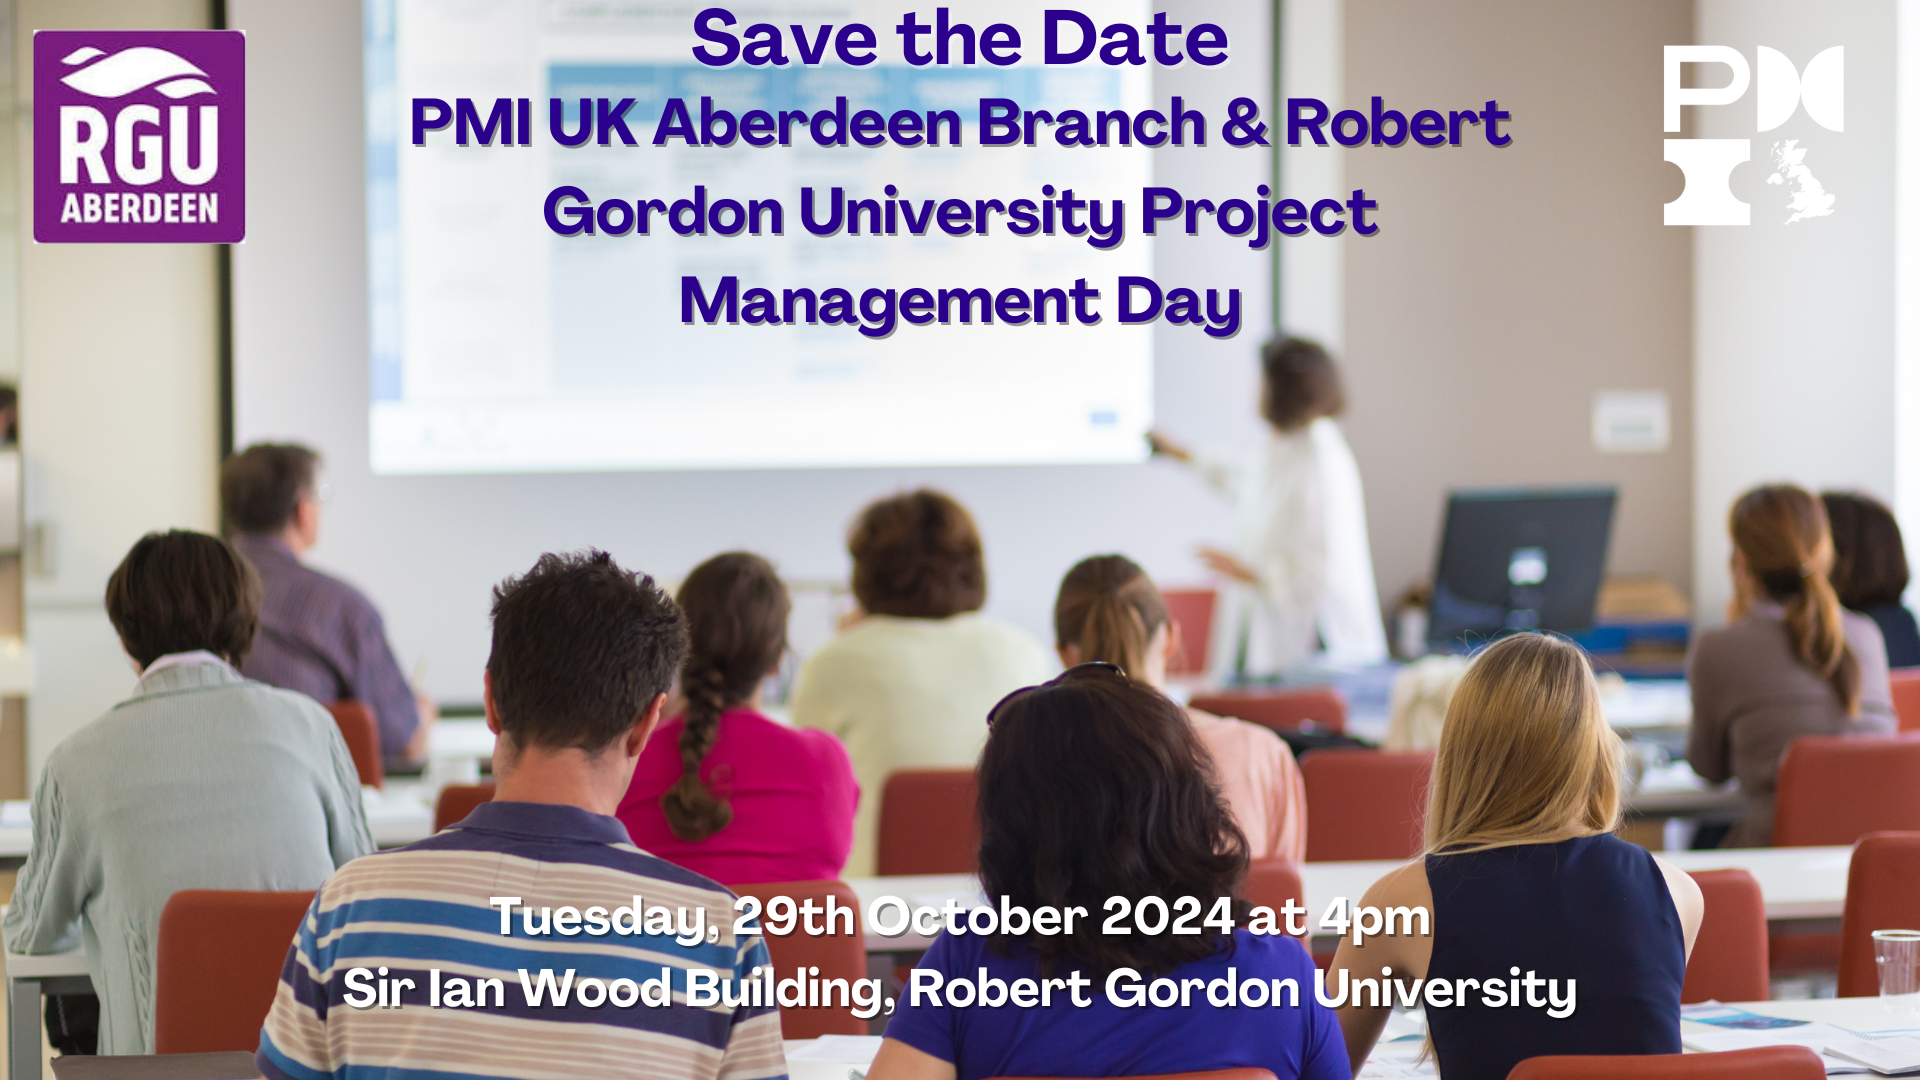 PMI Aberdeen Branch & Robert Gordon University Project Management Day event. 29th October 2024